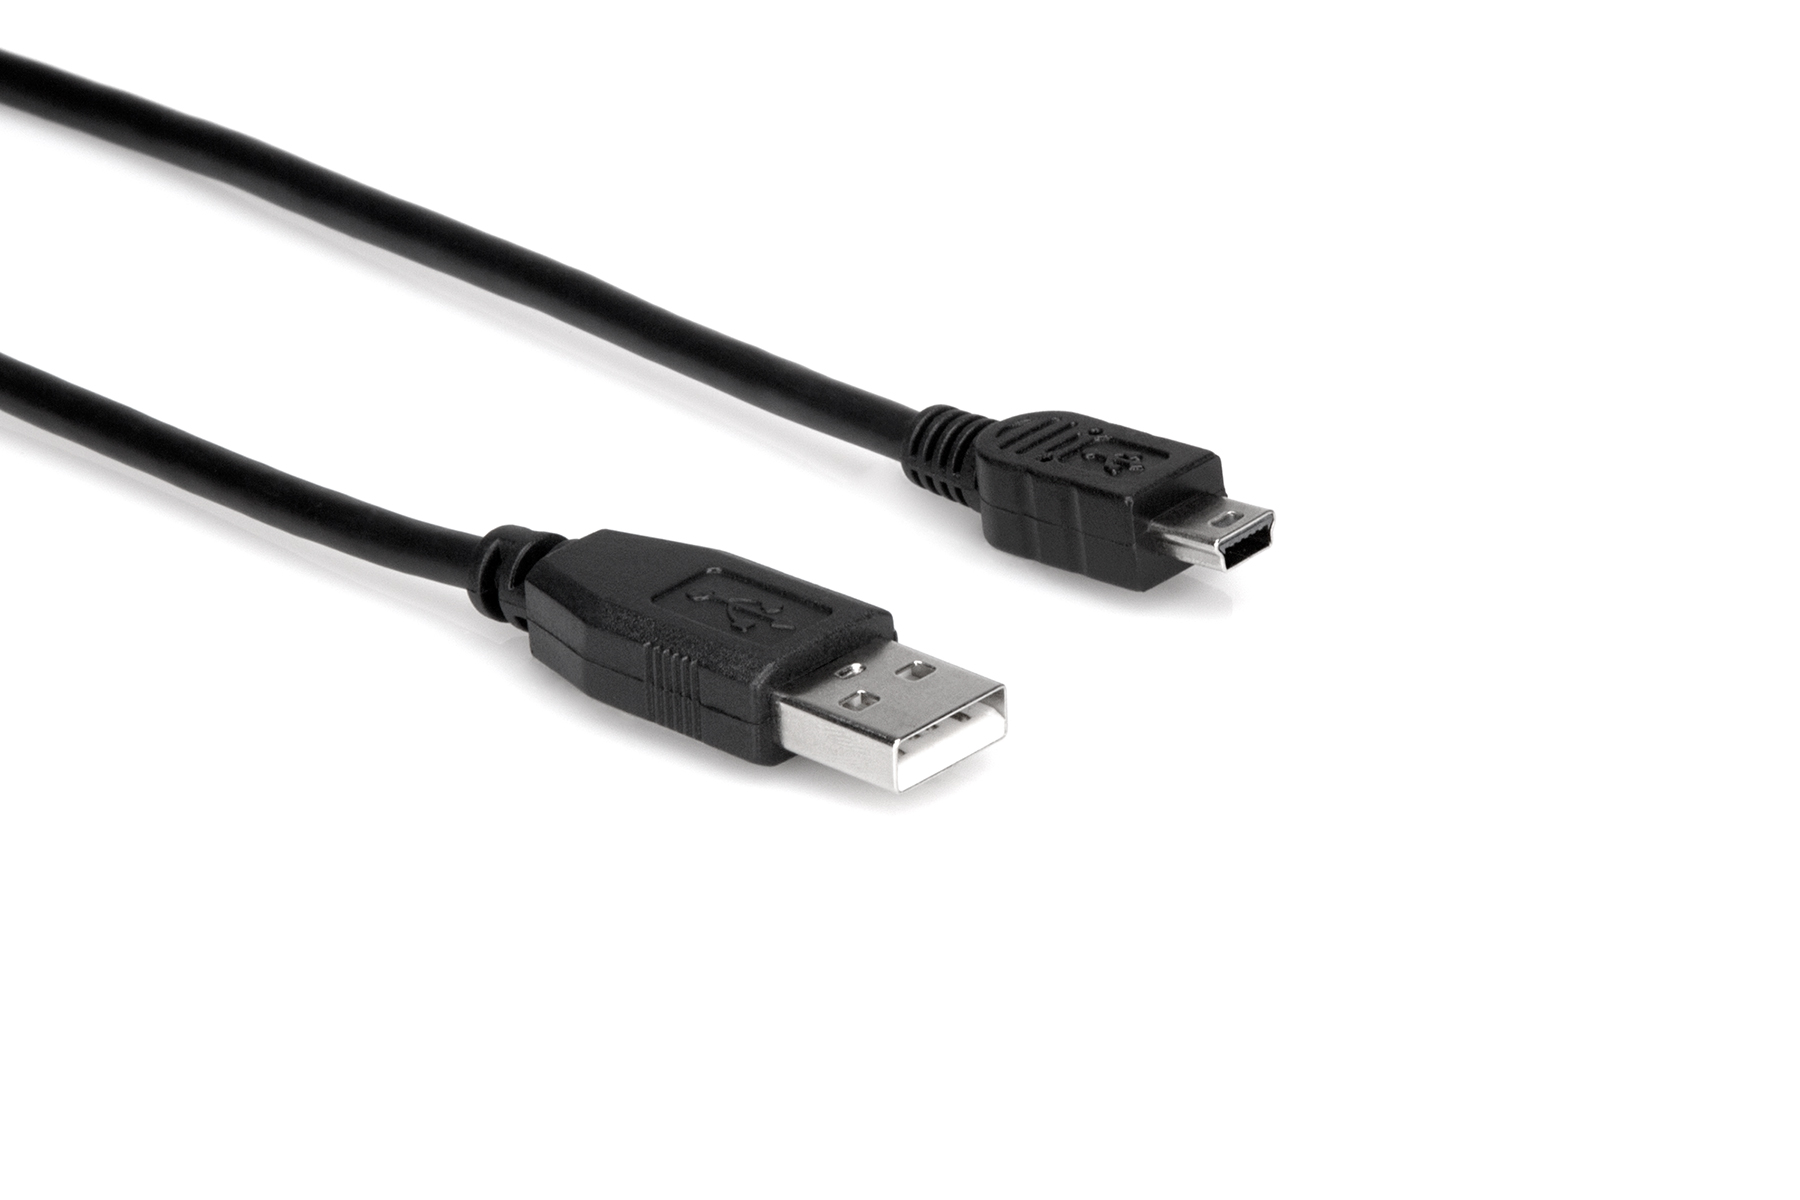 Auto mini-USB cable de carga 1000ma // Noza tec 4.3 pulgadas Navi // envío rápido ✔ ot51 